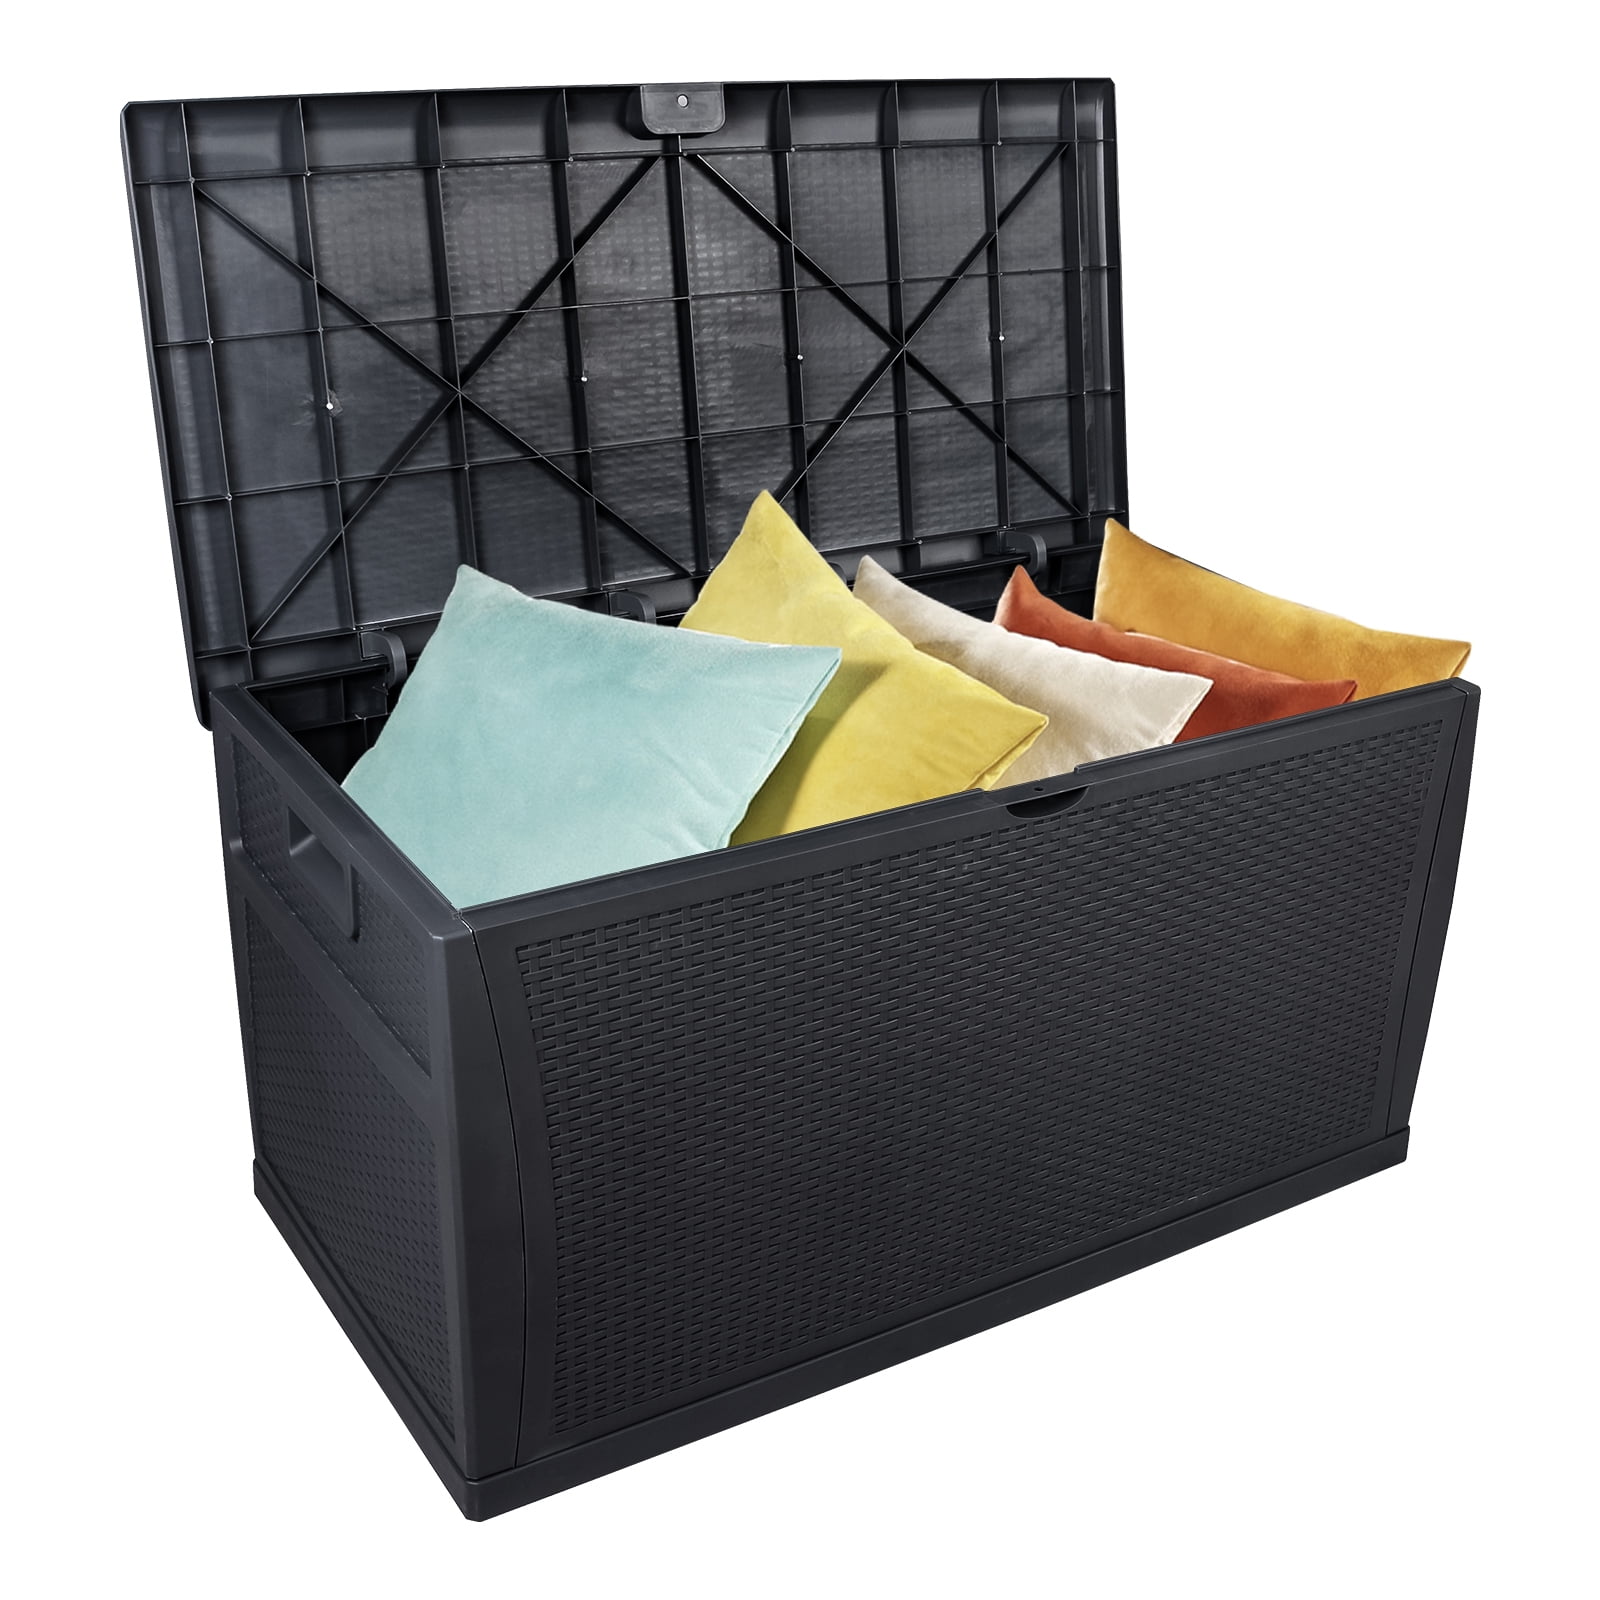 Details about   Garden Storage Box 75Gal Tool Case Cushion Bench Organizer In/Outdoor With Wheel 